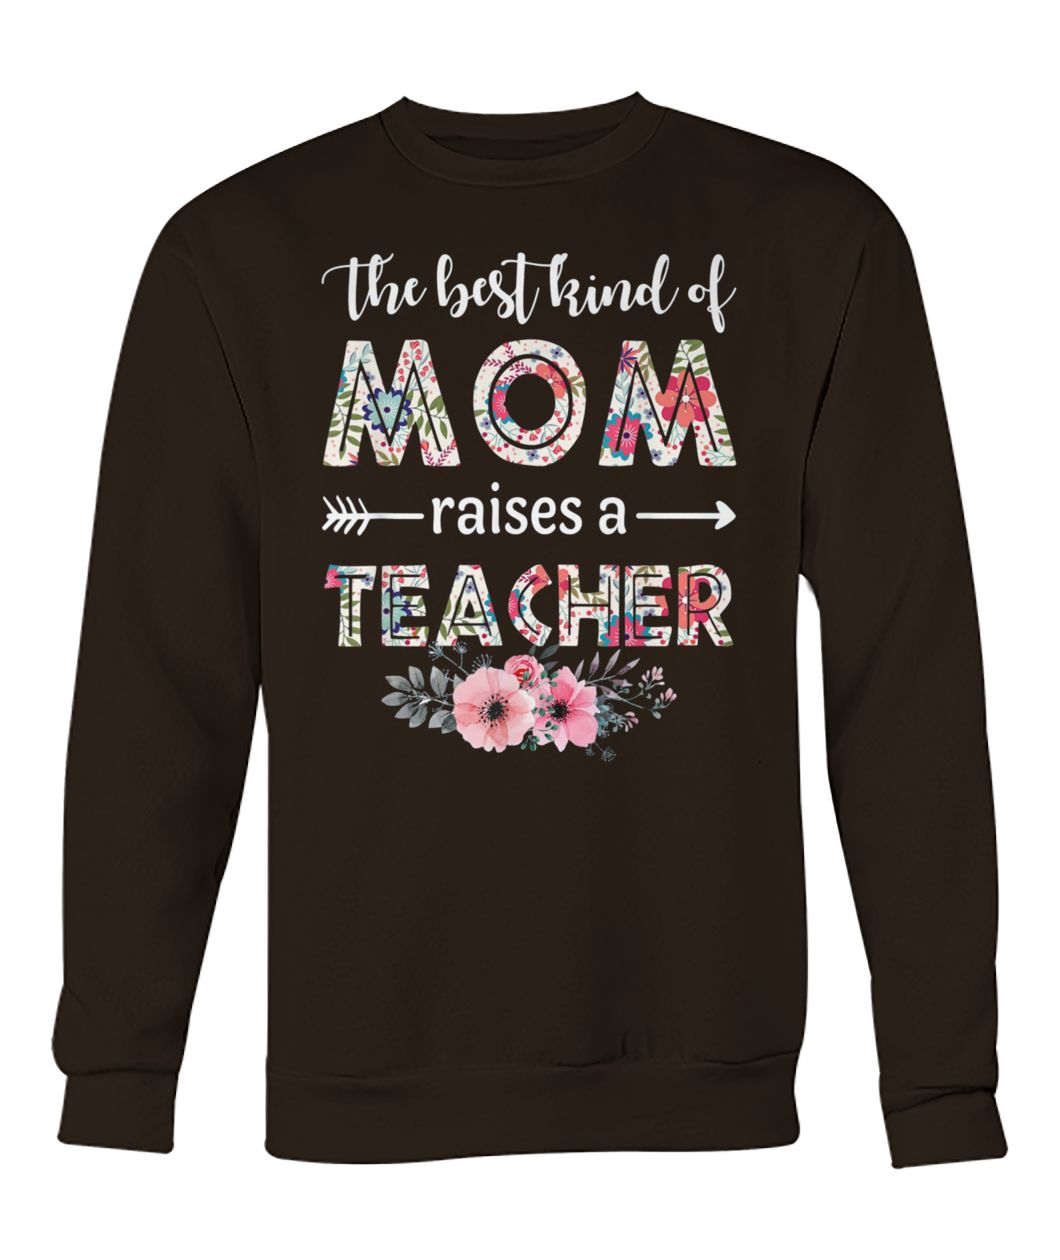 The best kind of mom raises a teacher happy mother day crew neck sweatshirt